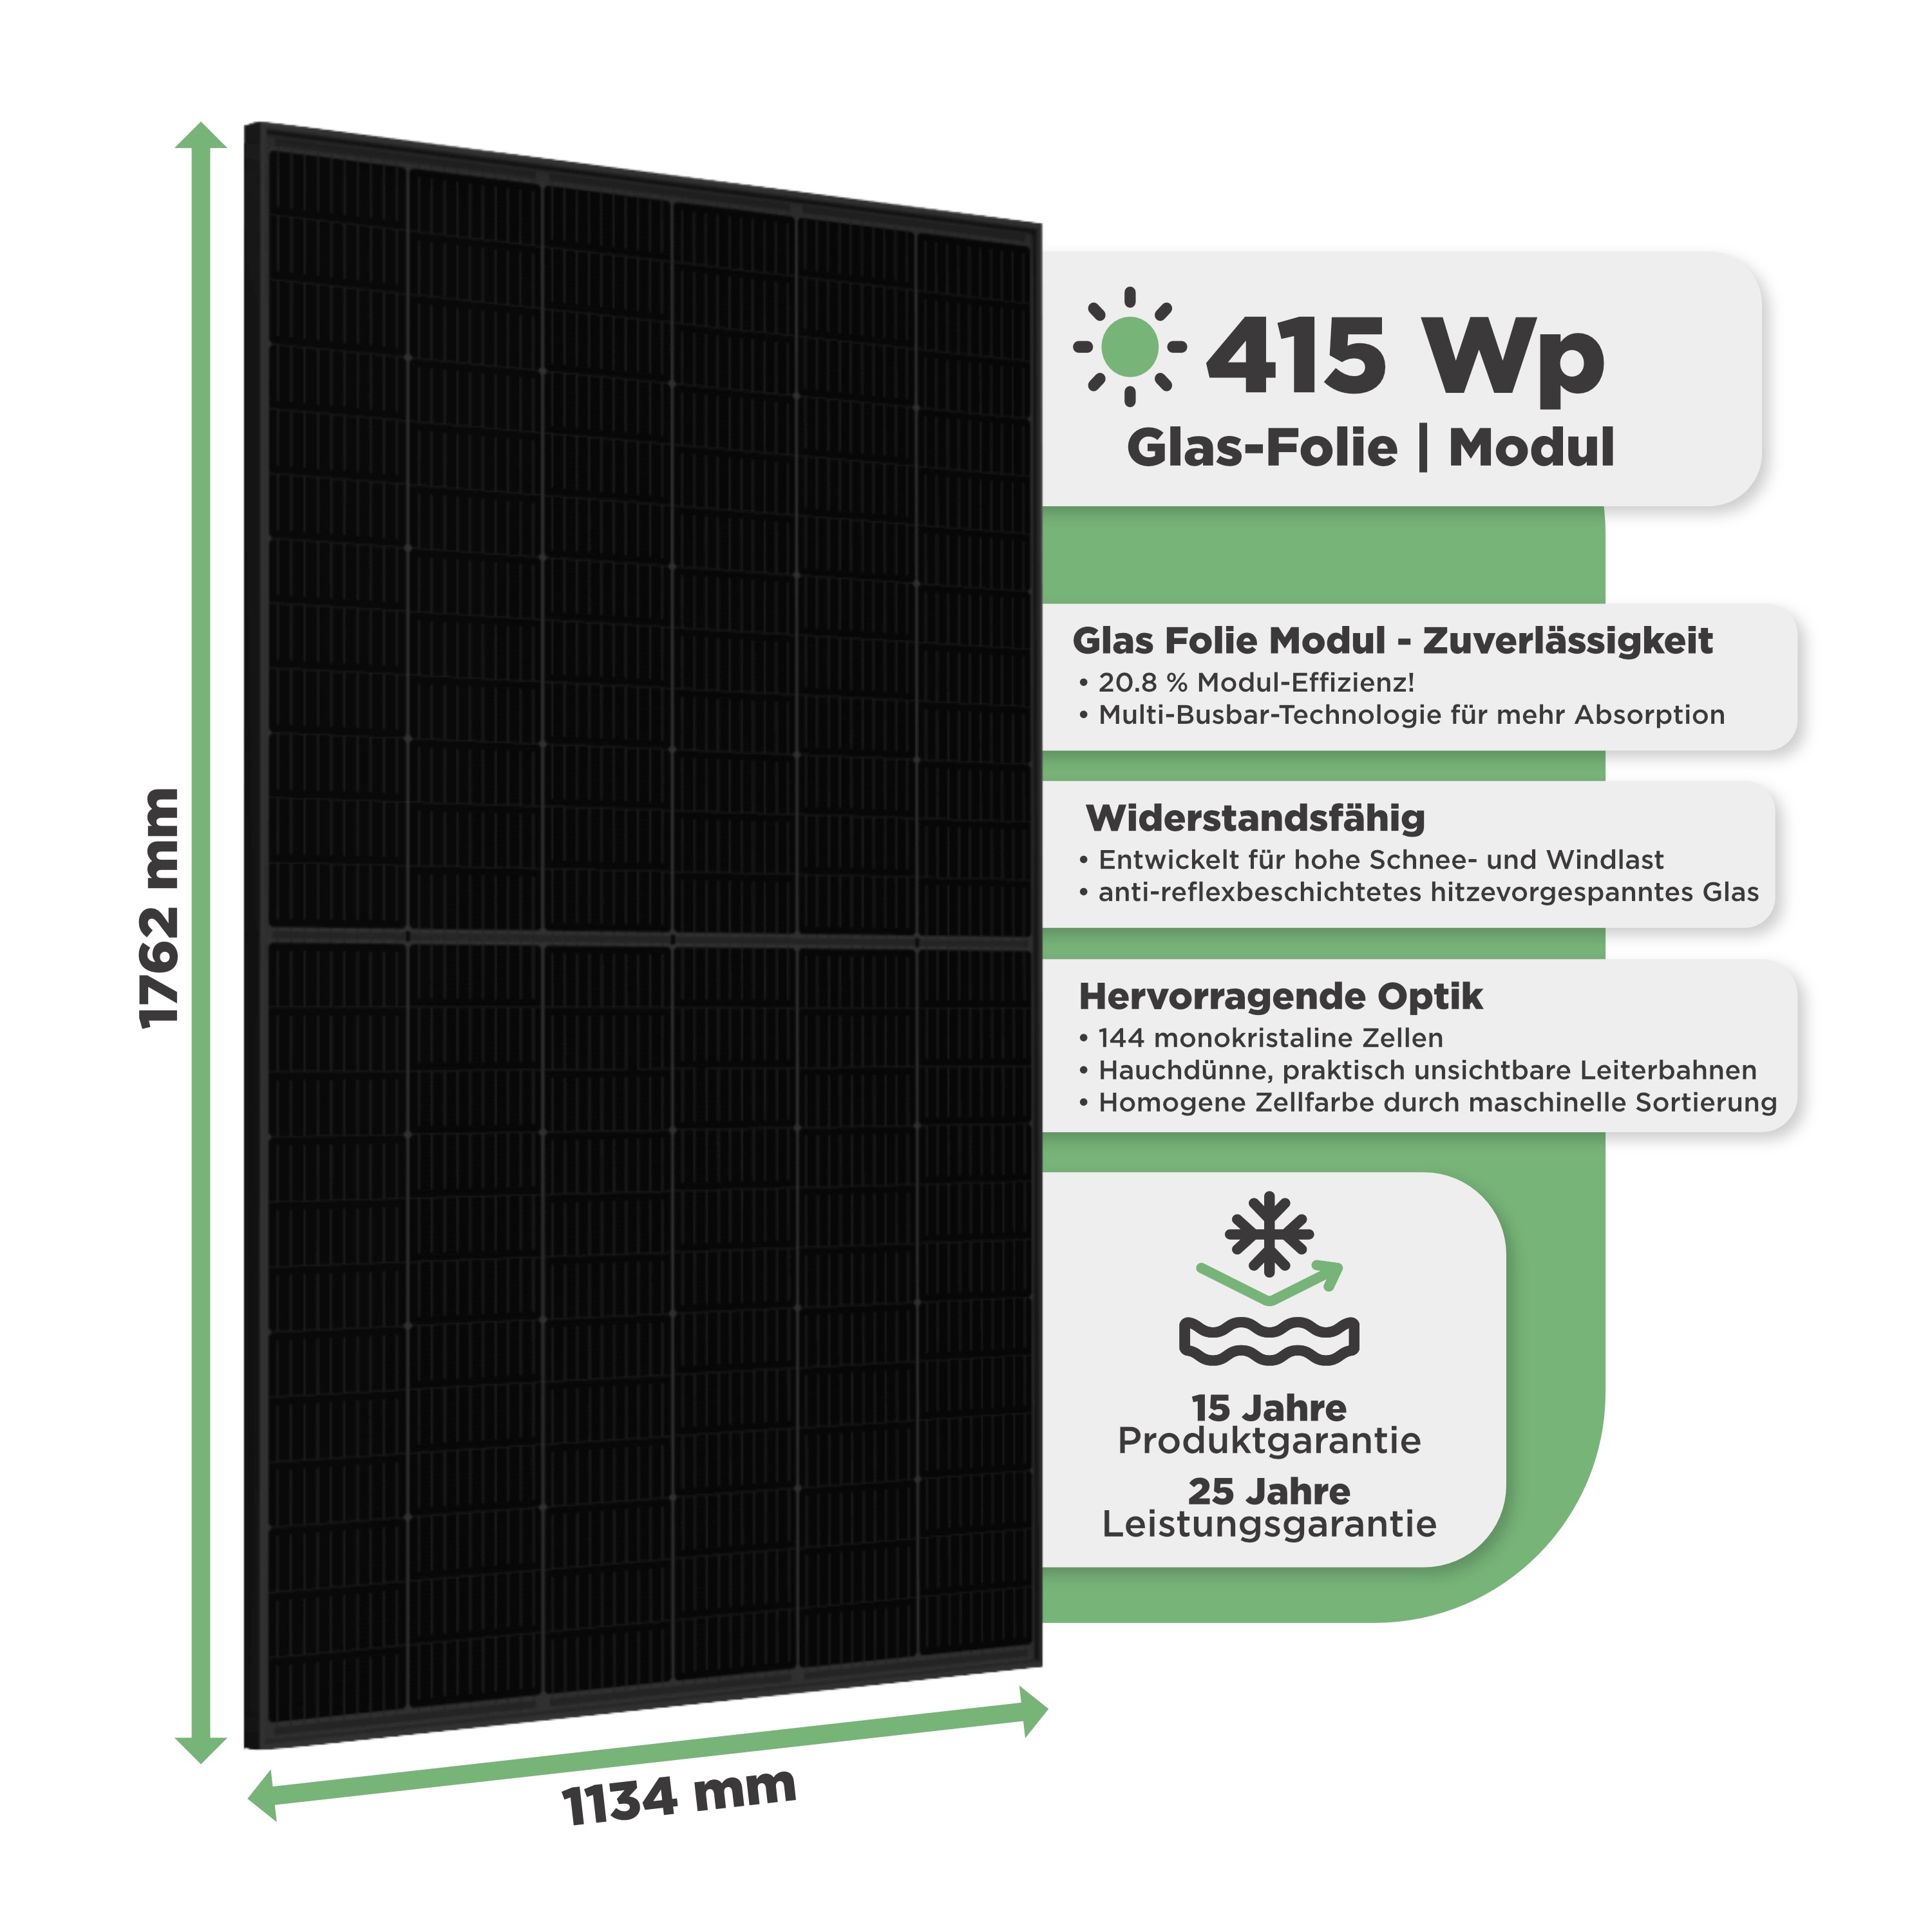 Balkonkraftwerk Wand 1245 Wp — APsystems EZ1-M 800 W / Trina Solar / 415 Wp (Full Black, Glas-Folie) / eine Reihe hochkant / 3 Module / 5 m